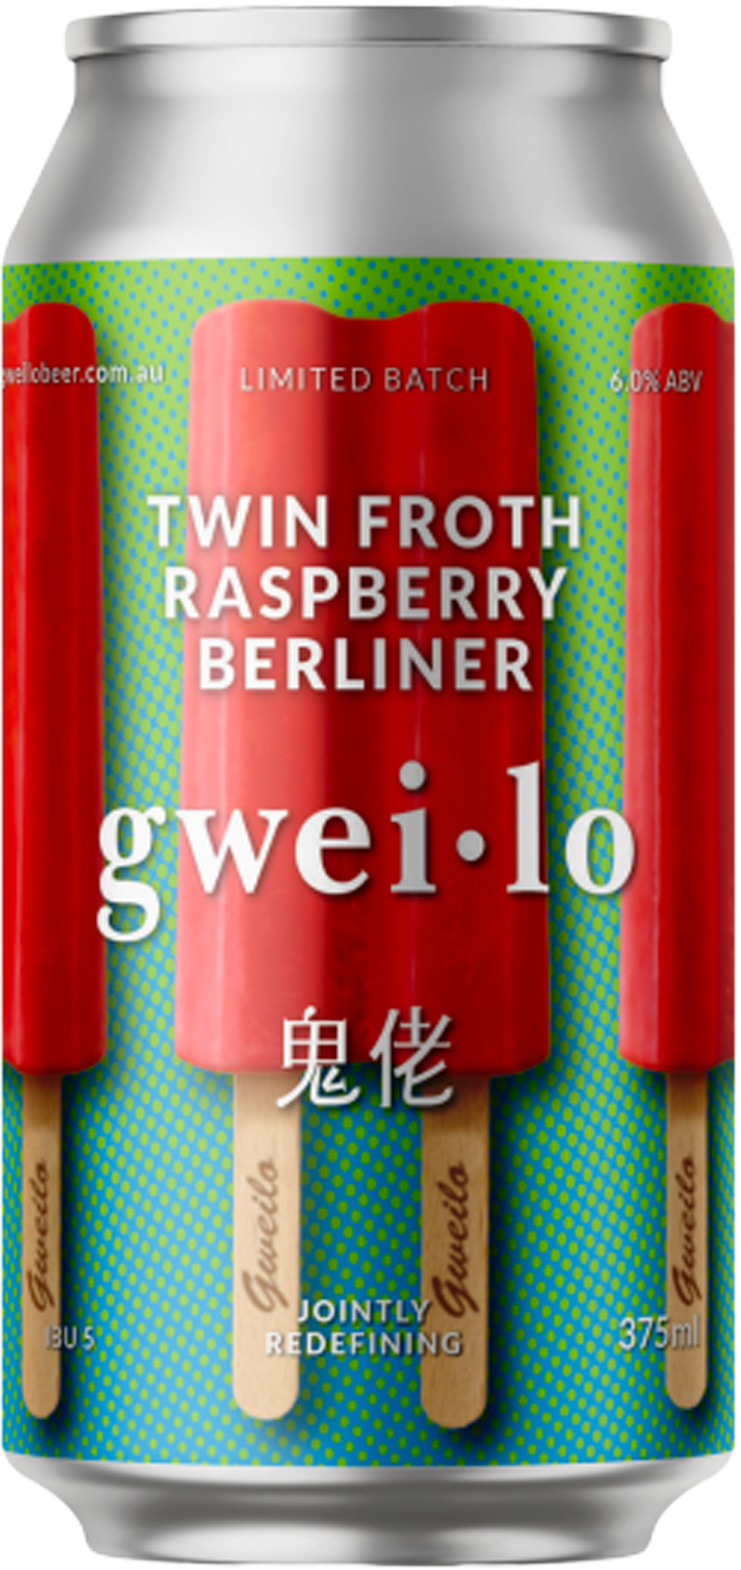 Gweilo Twin Froth Raspberry Berliner 375ml